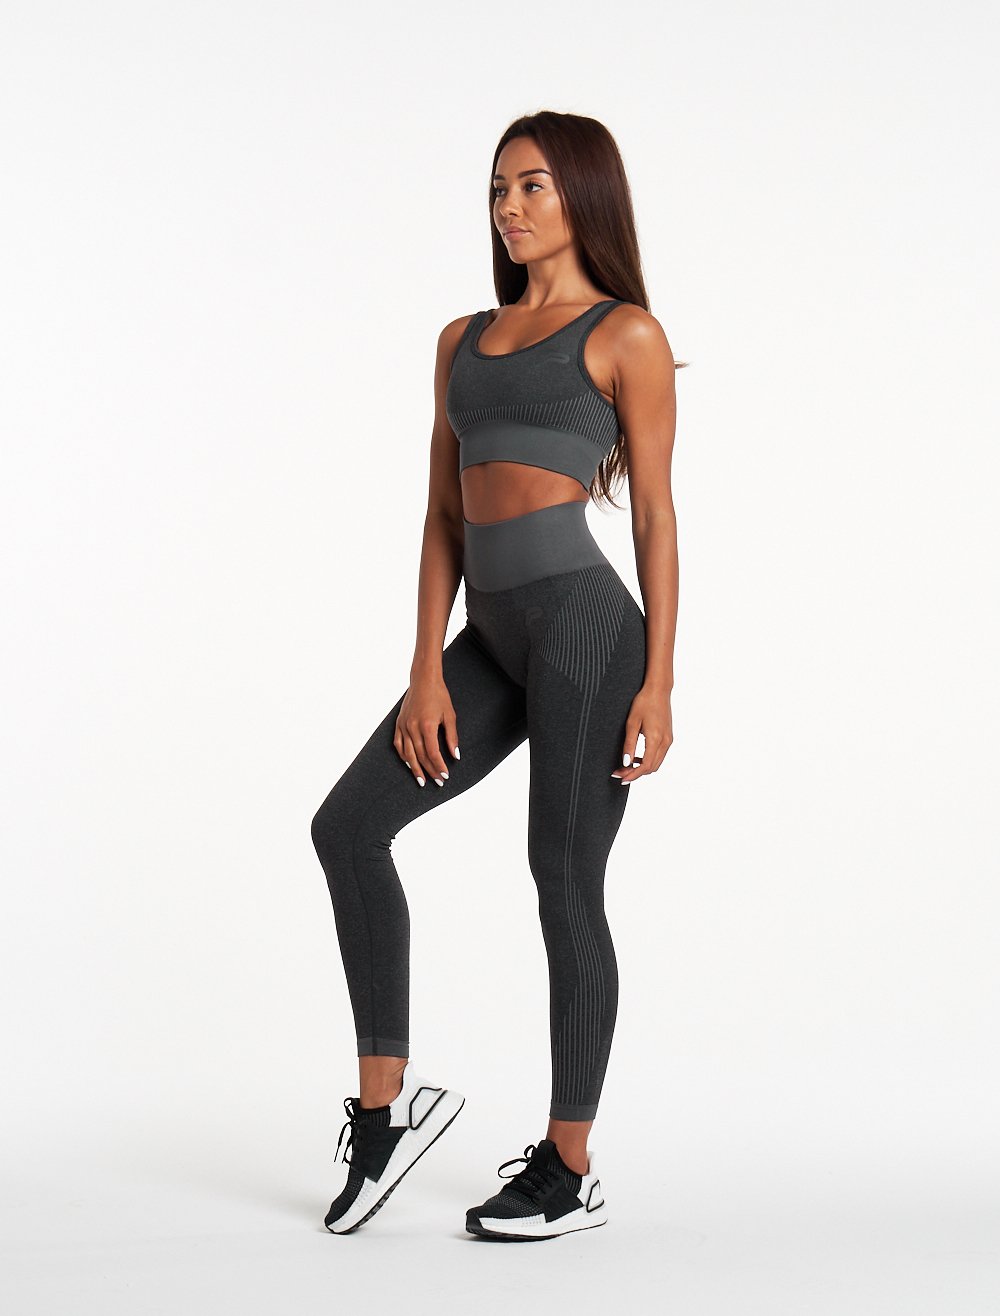 ADAPT Seamless Leggings / Black.Charcoal Pursue Fitness 7